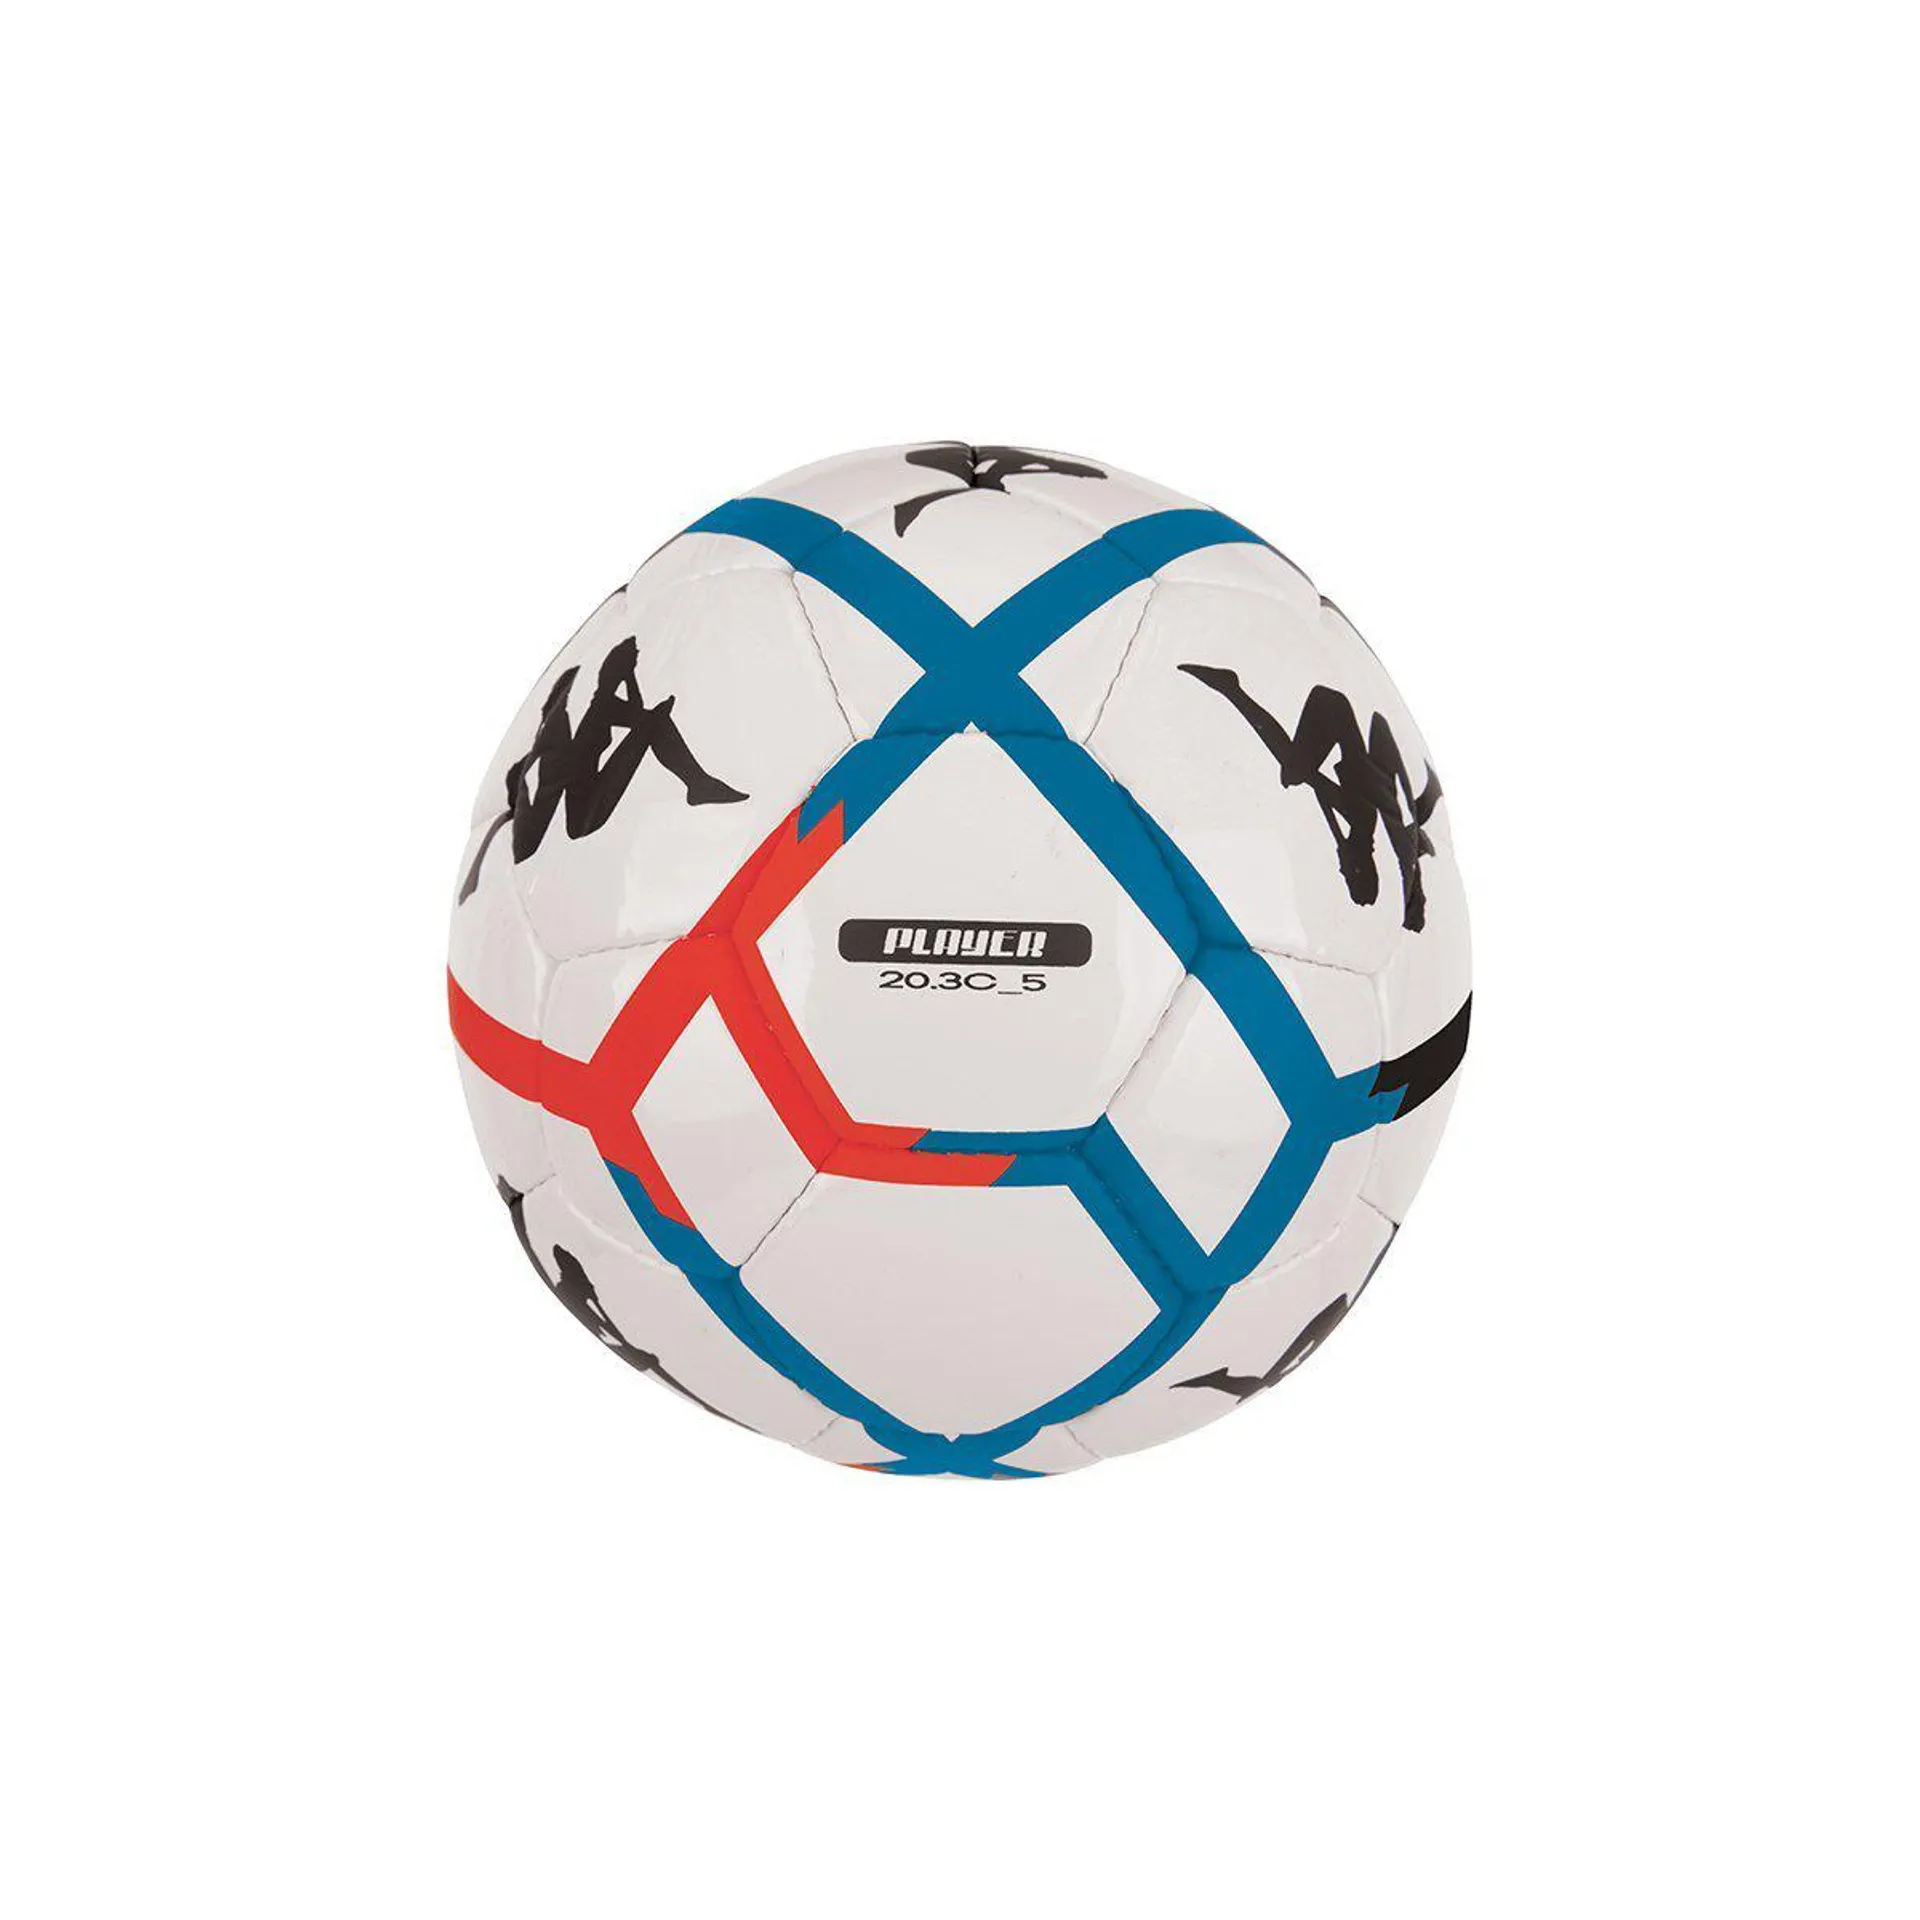 Balón de fútbol unisex 20.3C Blanco